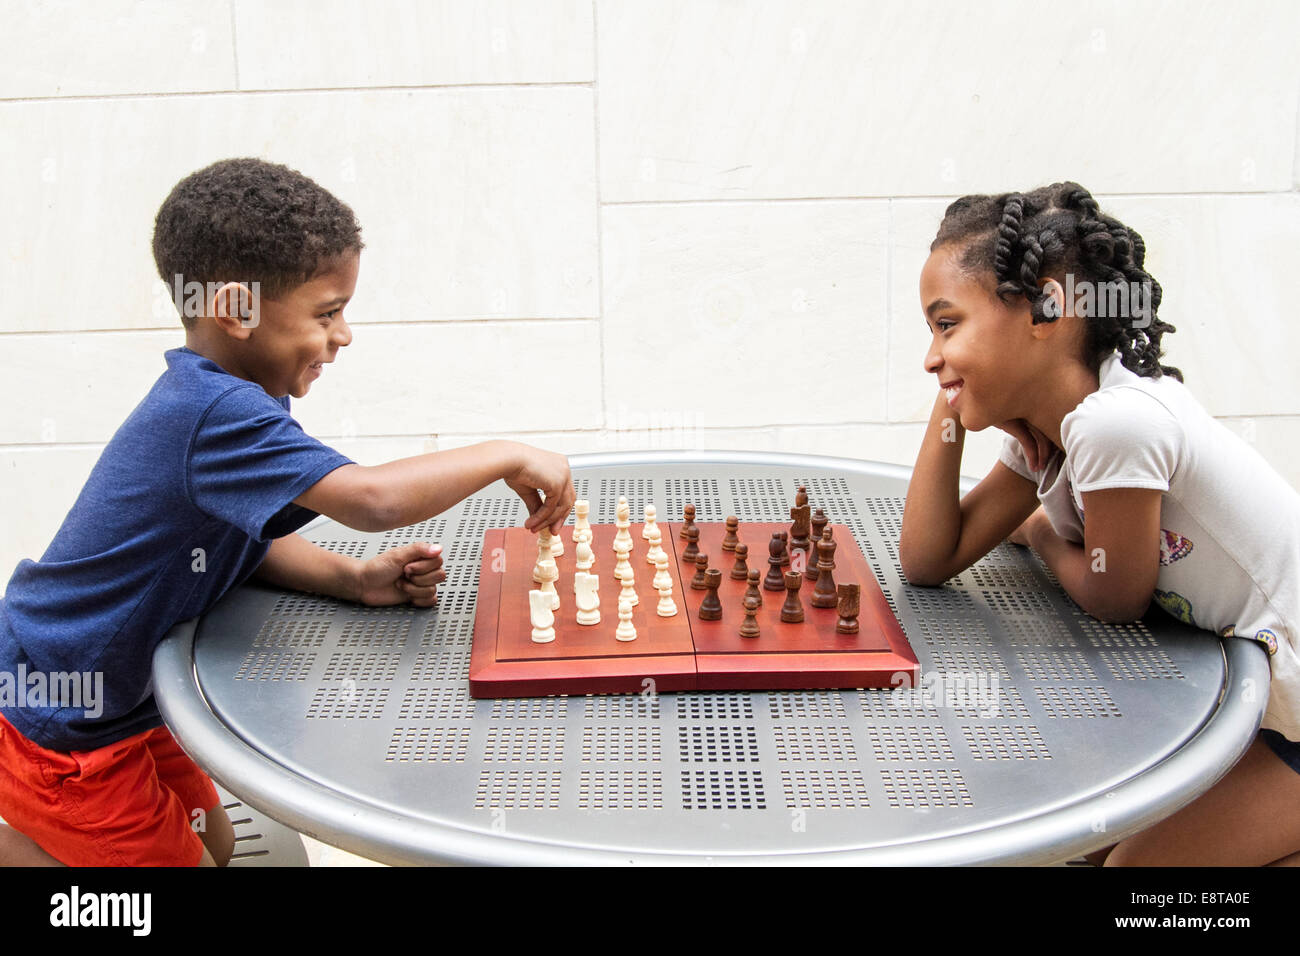 He to start playing. Дети играют в шахматы. Дети играющие в шахматы. Девочка играет в шахматы. Африканские шахматы.